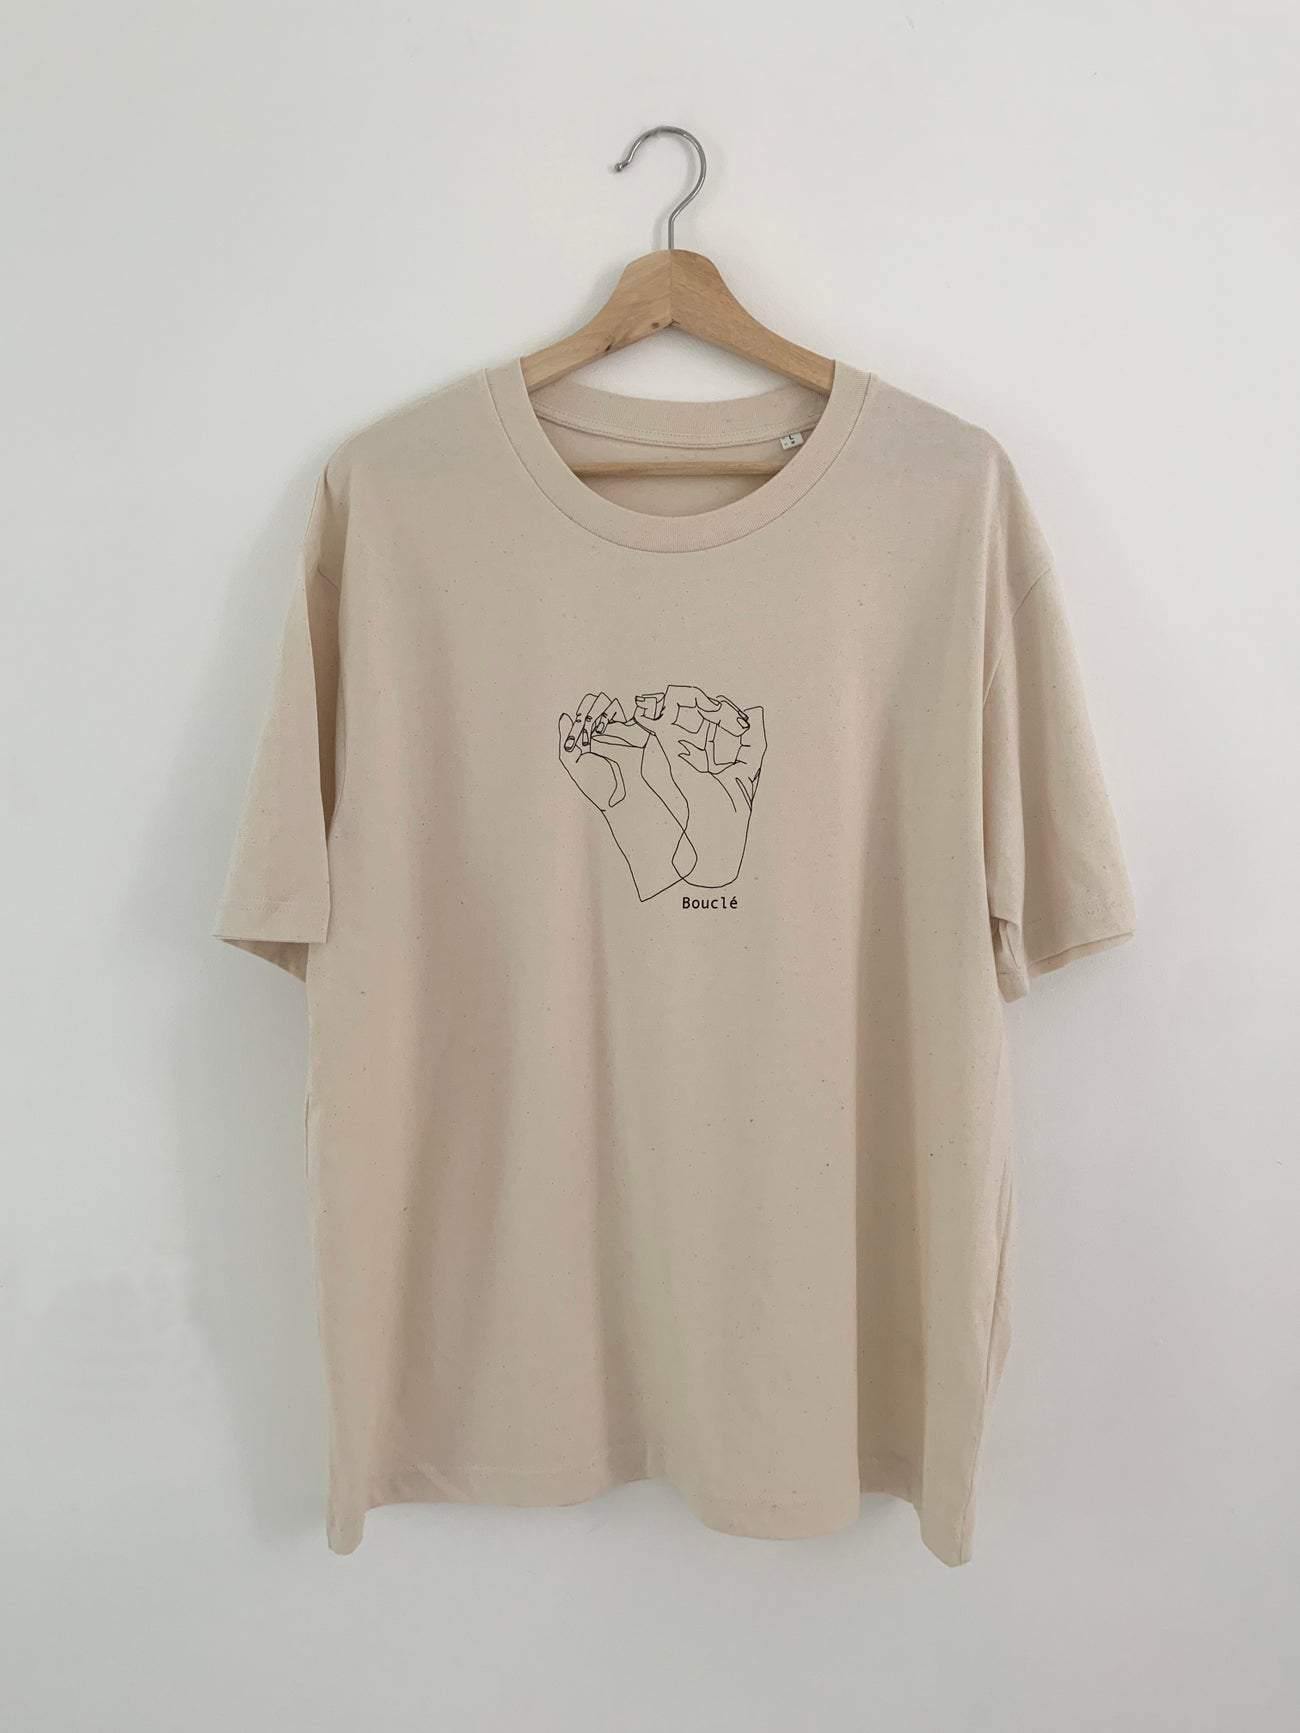 Bouclé Hackney organic cotton cream t-shirt logo hand drawing minimal design 